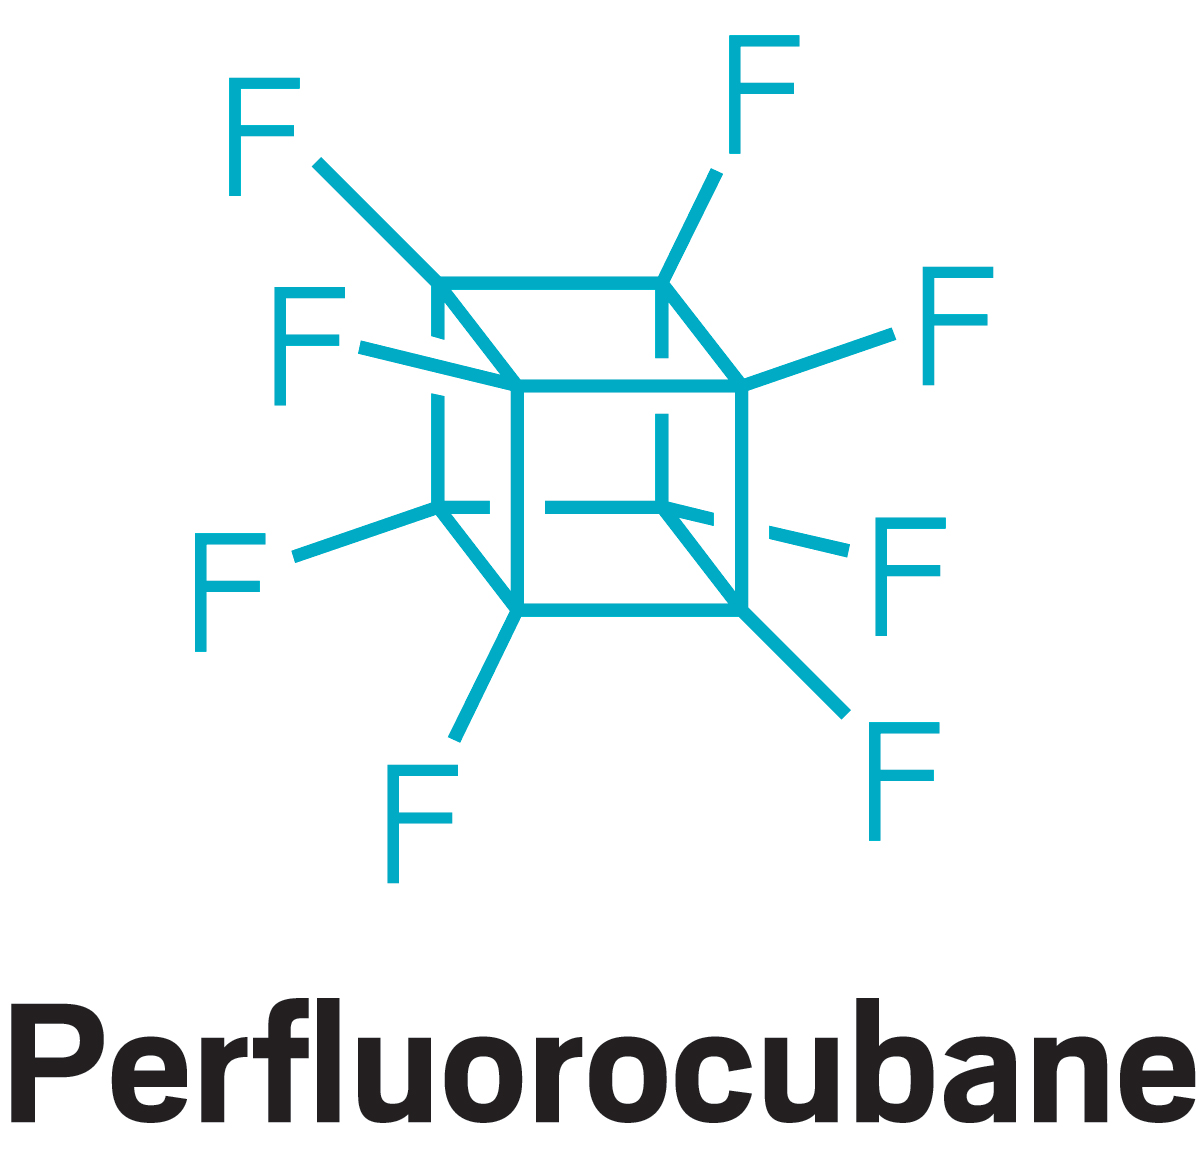 Structure of perfluorocubane